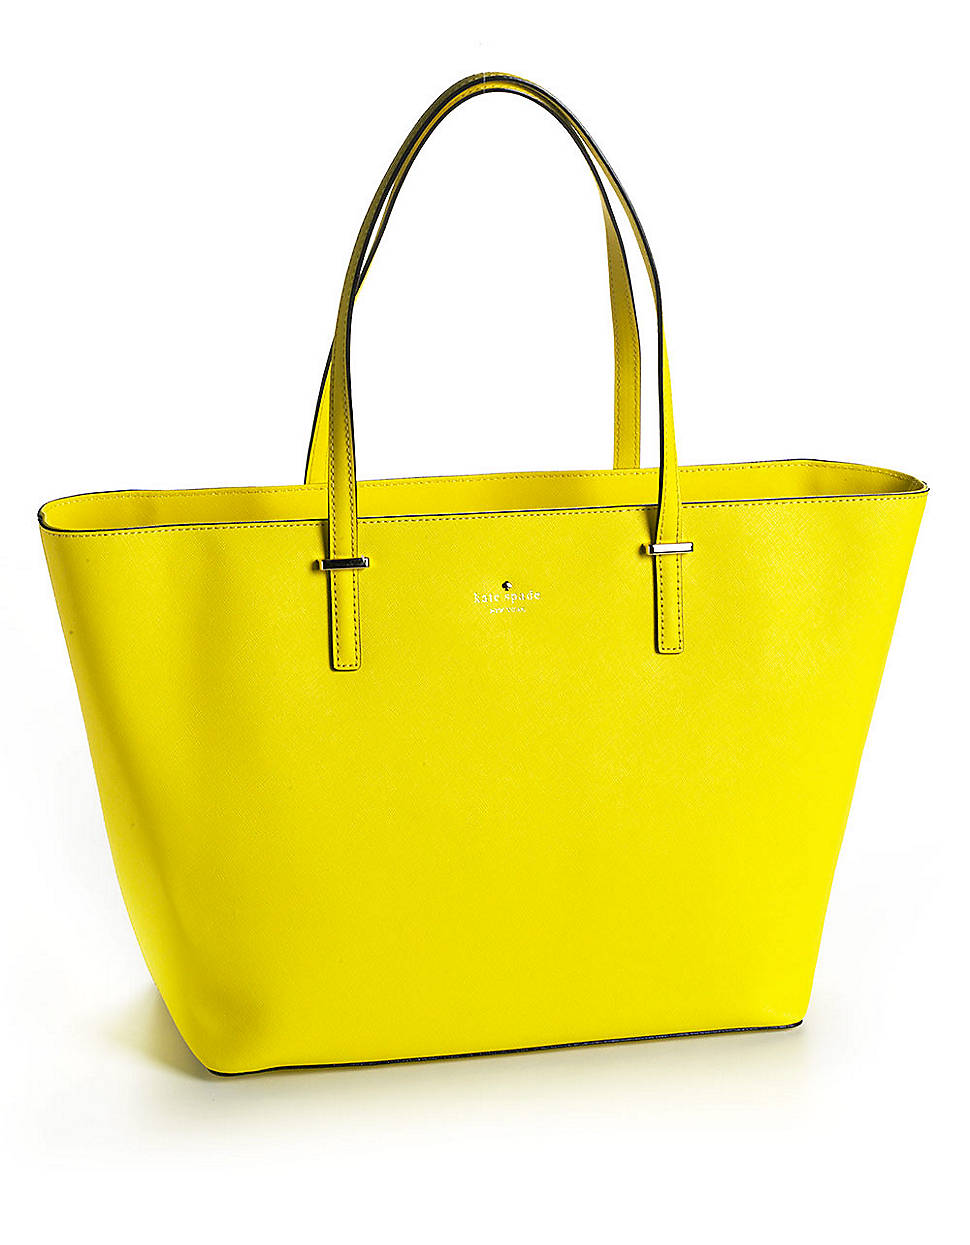 Kate Spade Cedar Street Medium Harmony Leather Tote Bag in Yellow - Lyst